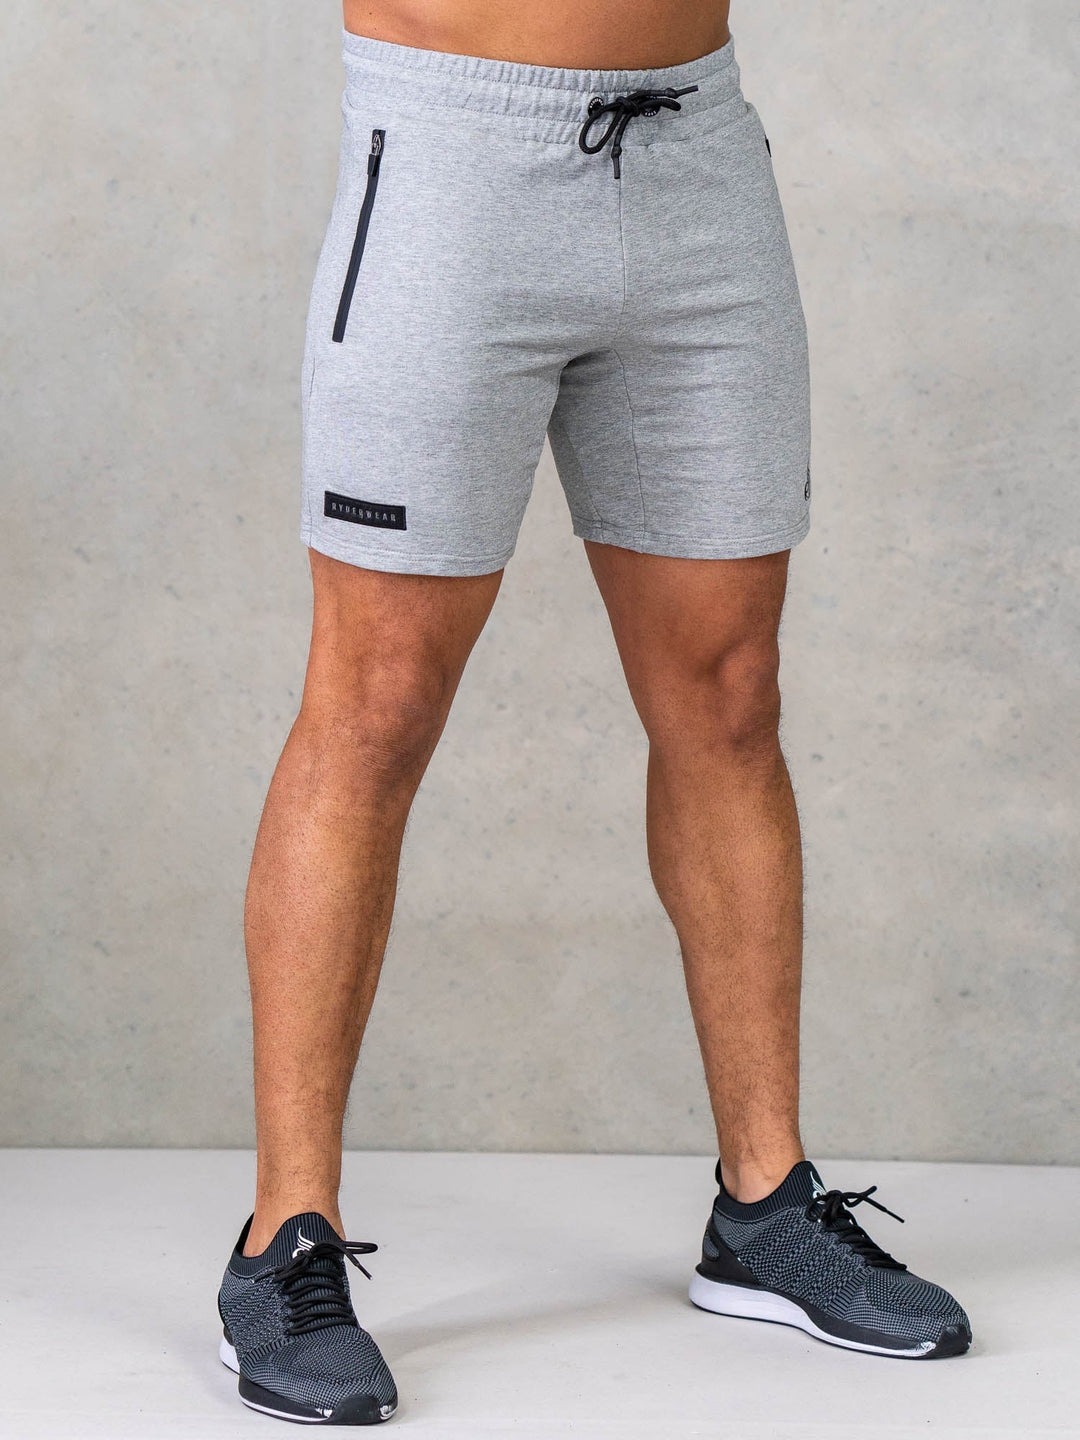 Endurance Track Shorts - Grey Marl Clothing Ryderwear 